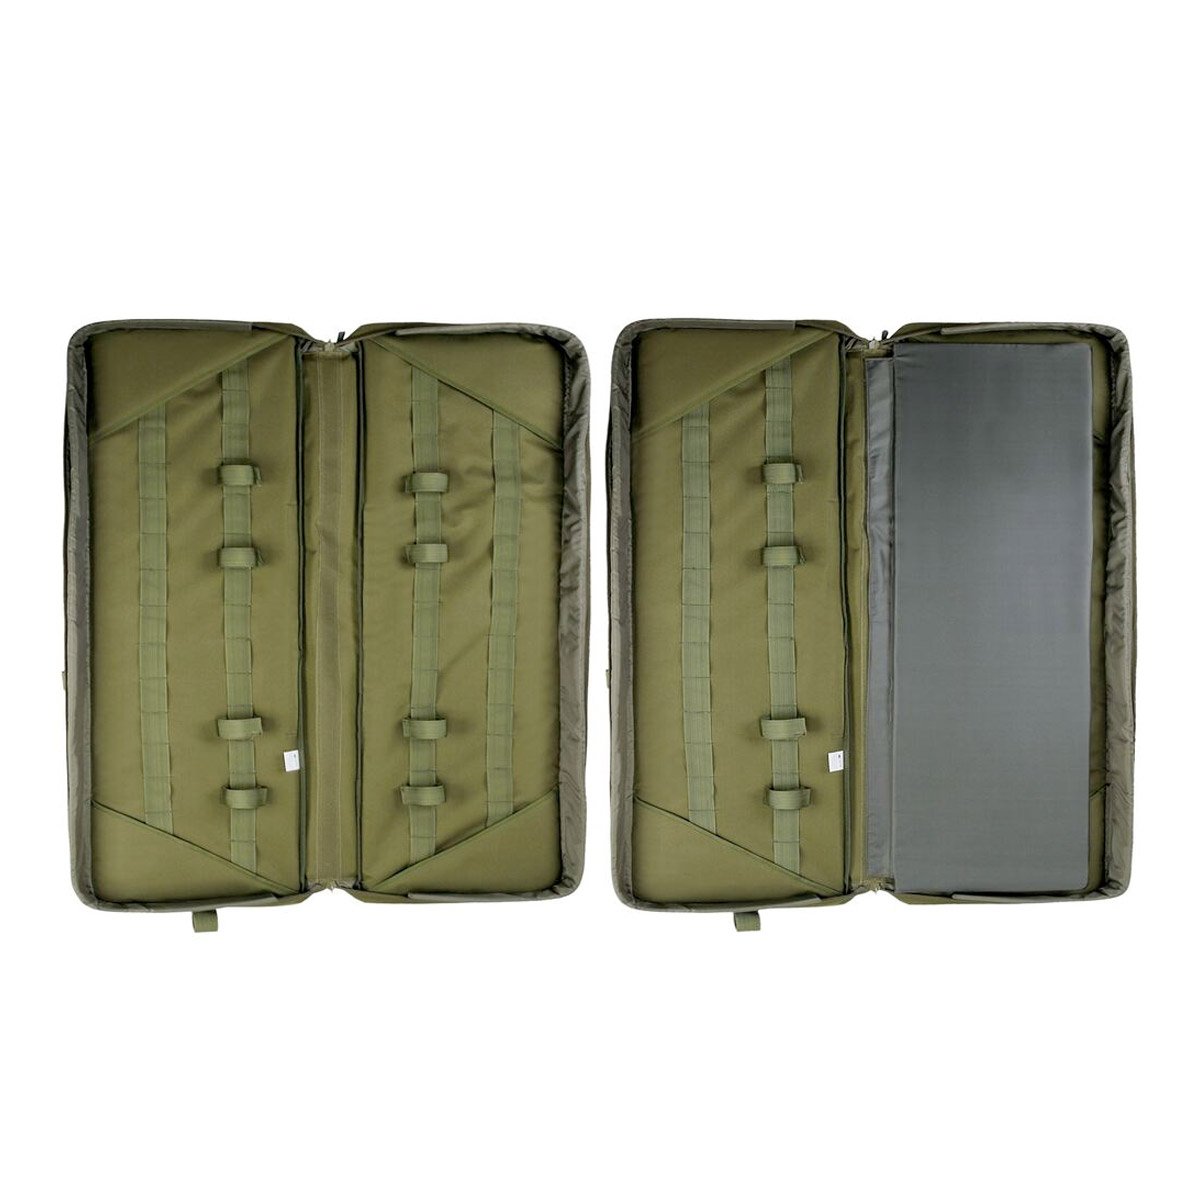 Evolution Gear 36 Inch Double Soft Rifle Bag | Tactical Gear Australia Tactical Gear